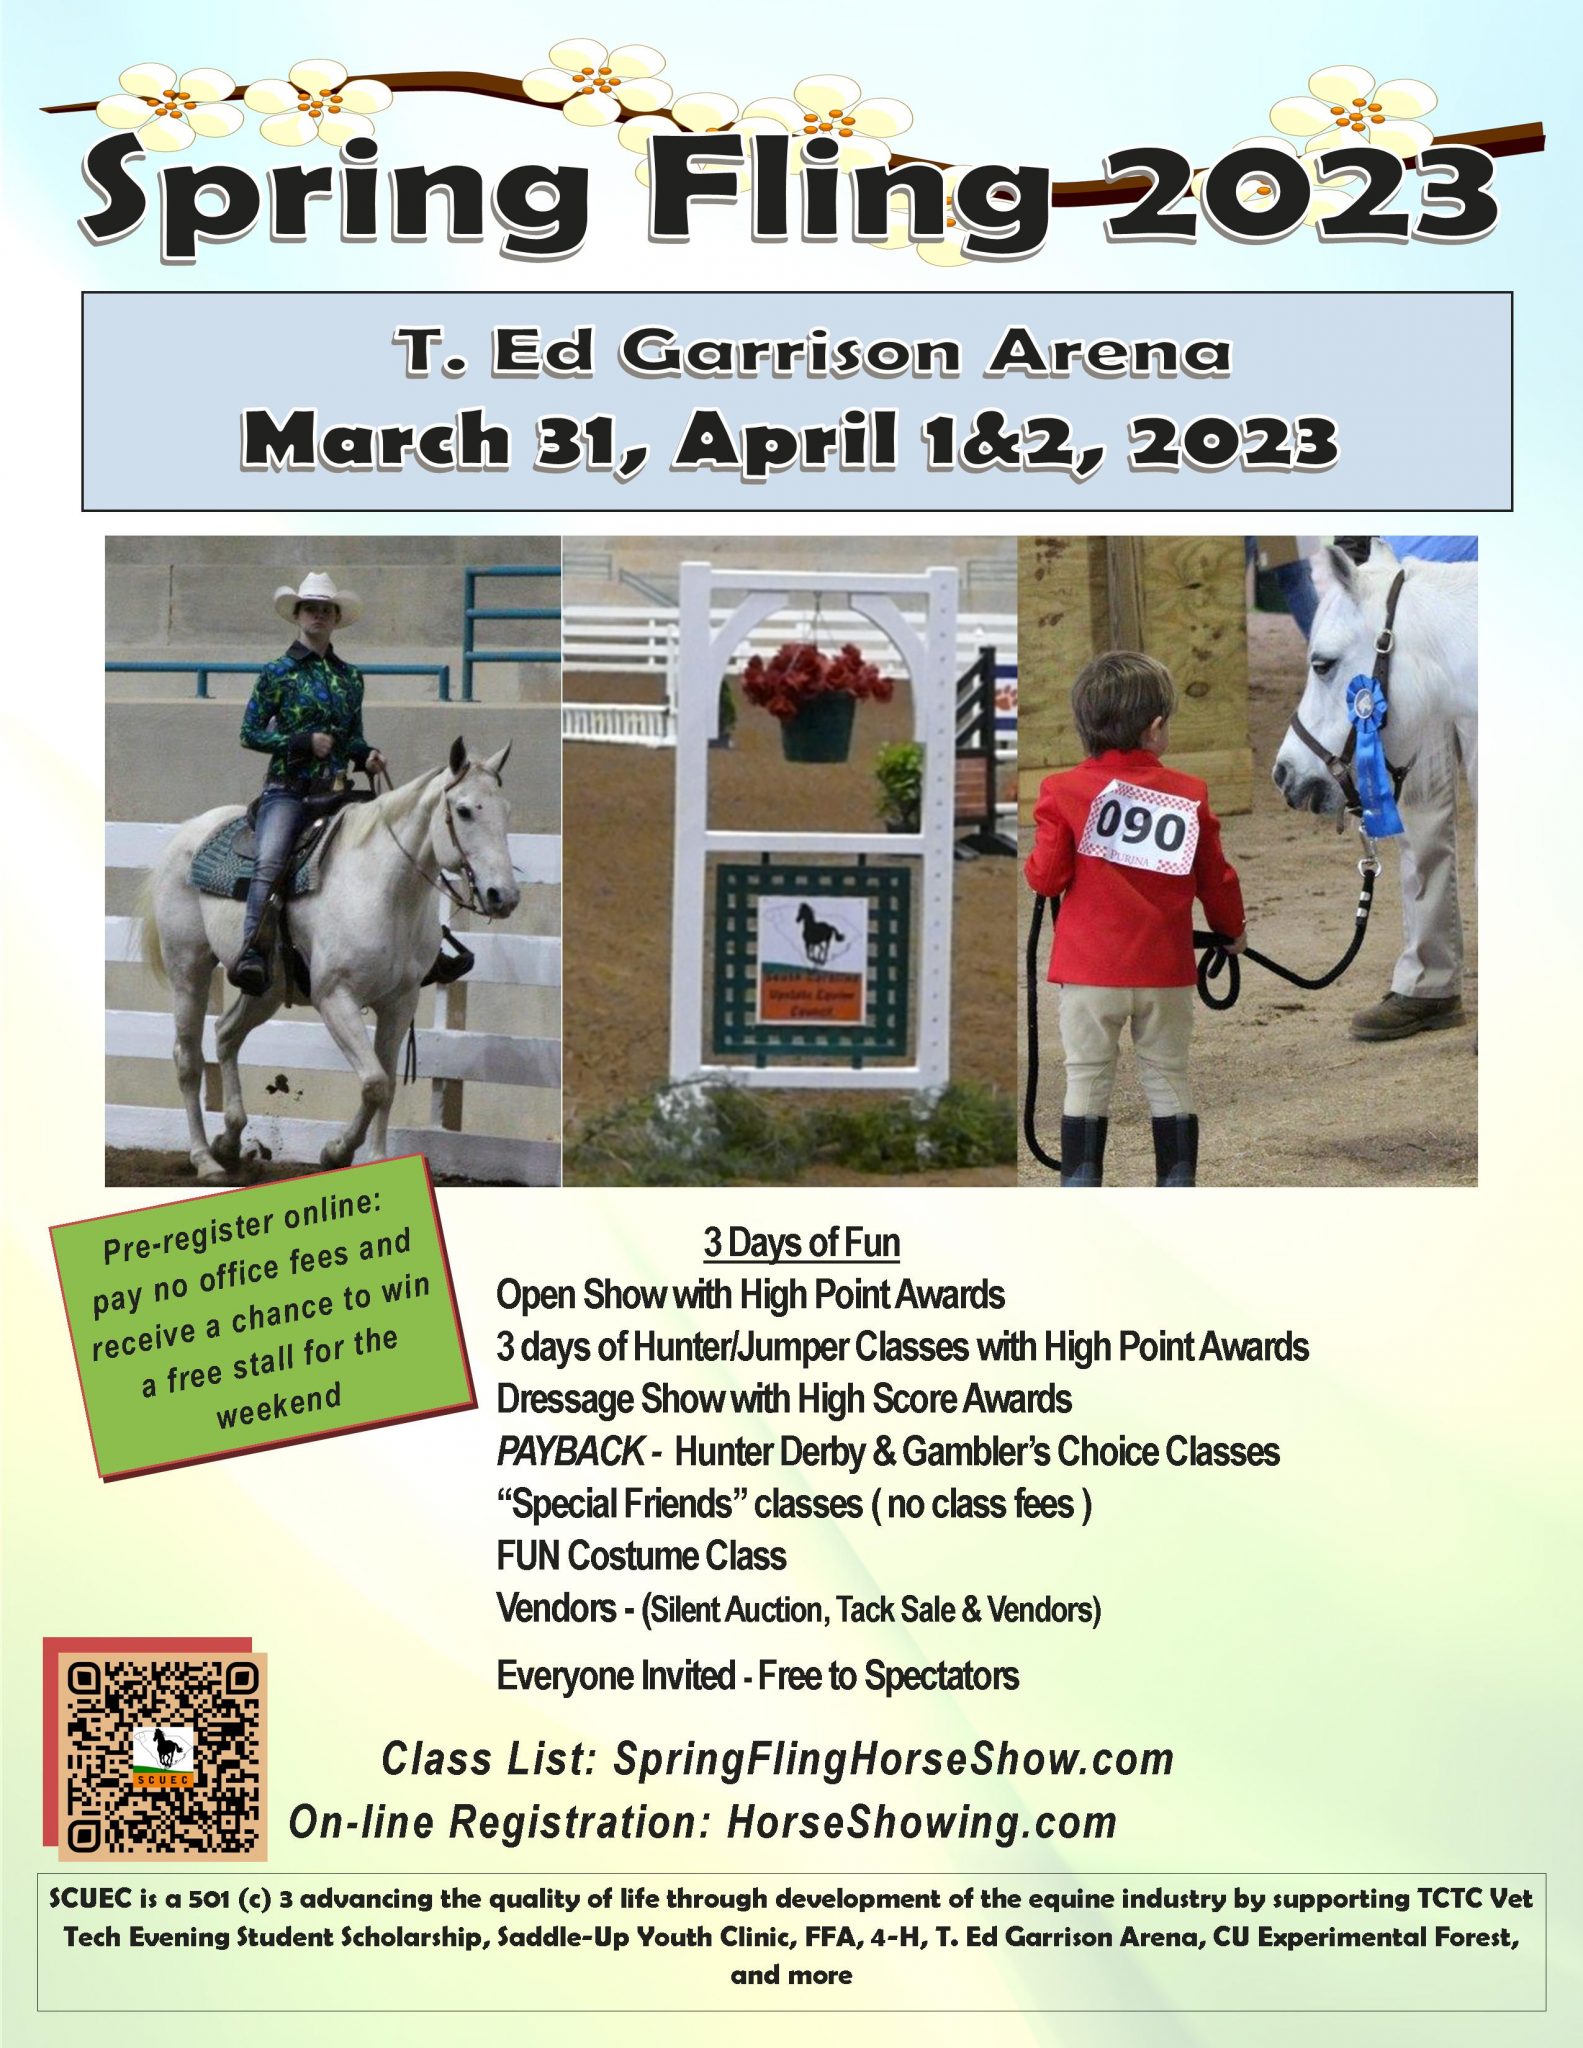 Spring Fling SC Upstate Equine Council